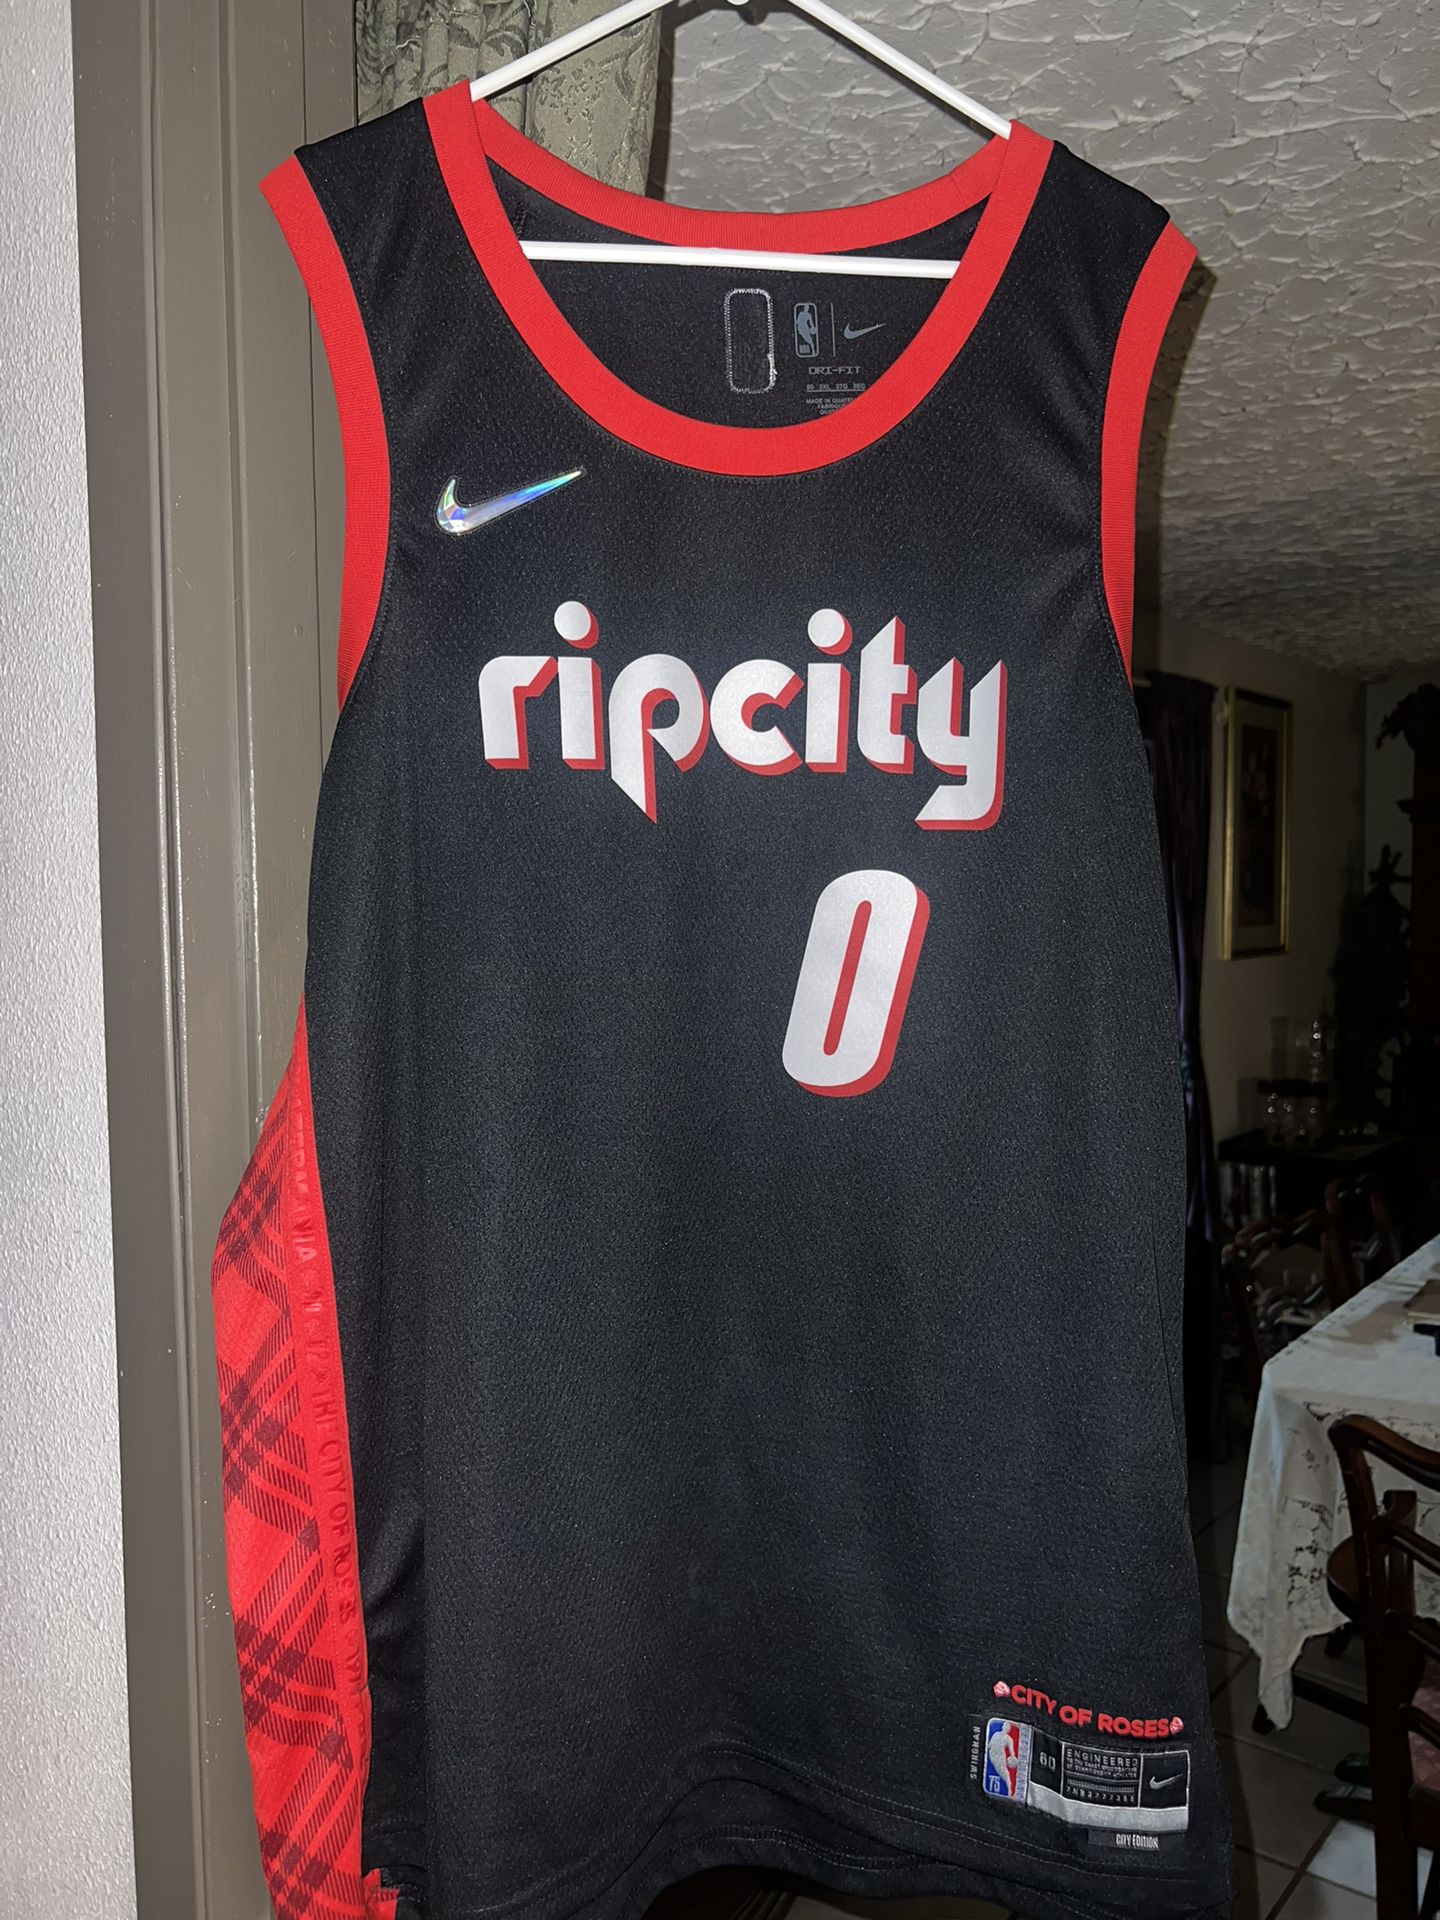 rip city edition jersey